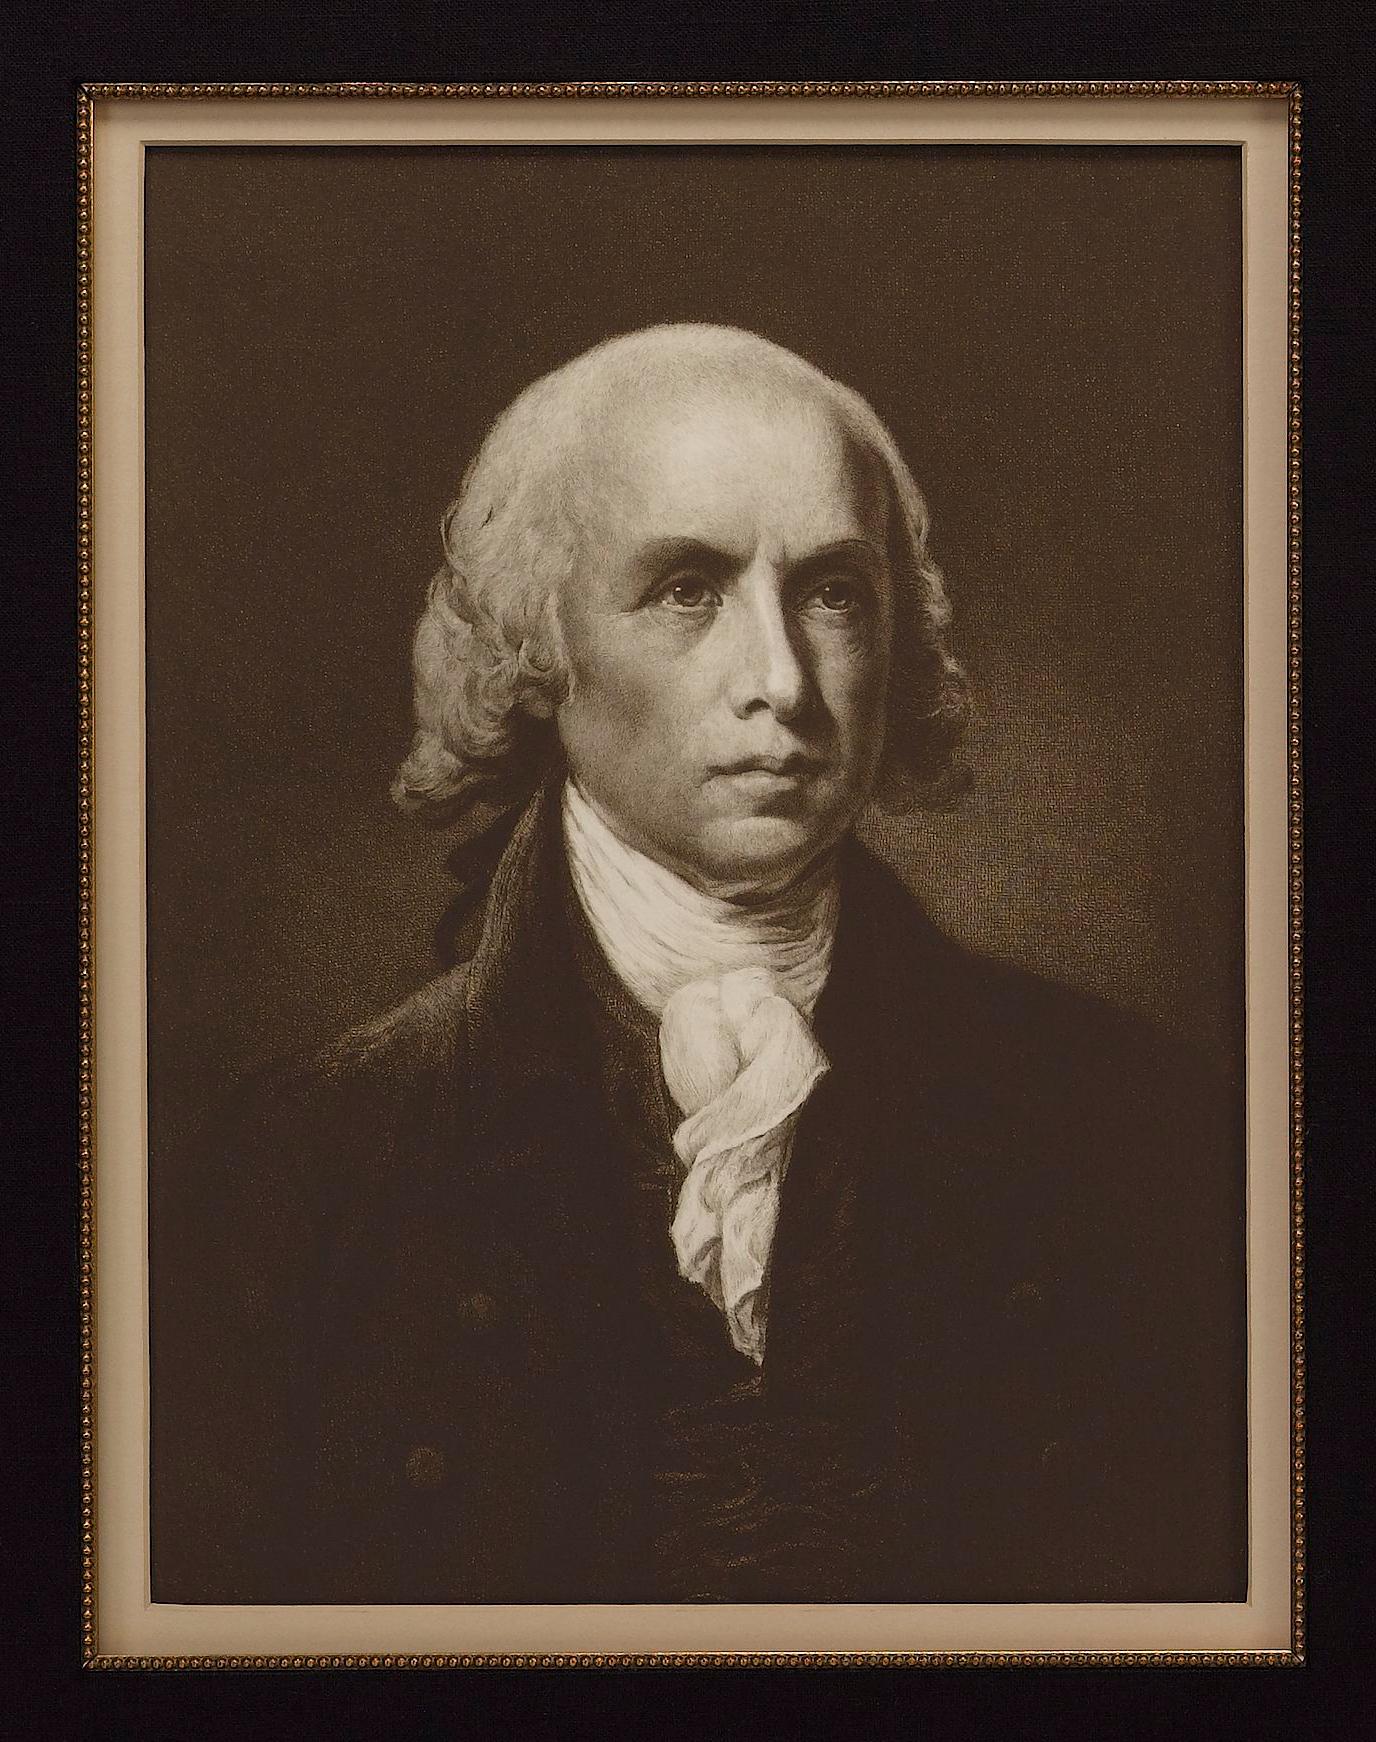 American Thomas Jefferson and James Madison Signed Ship's Passport, 1805